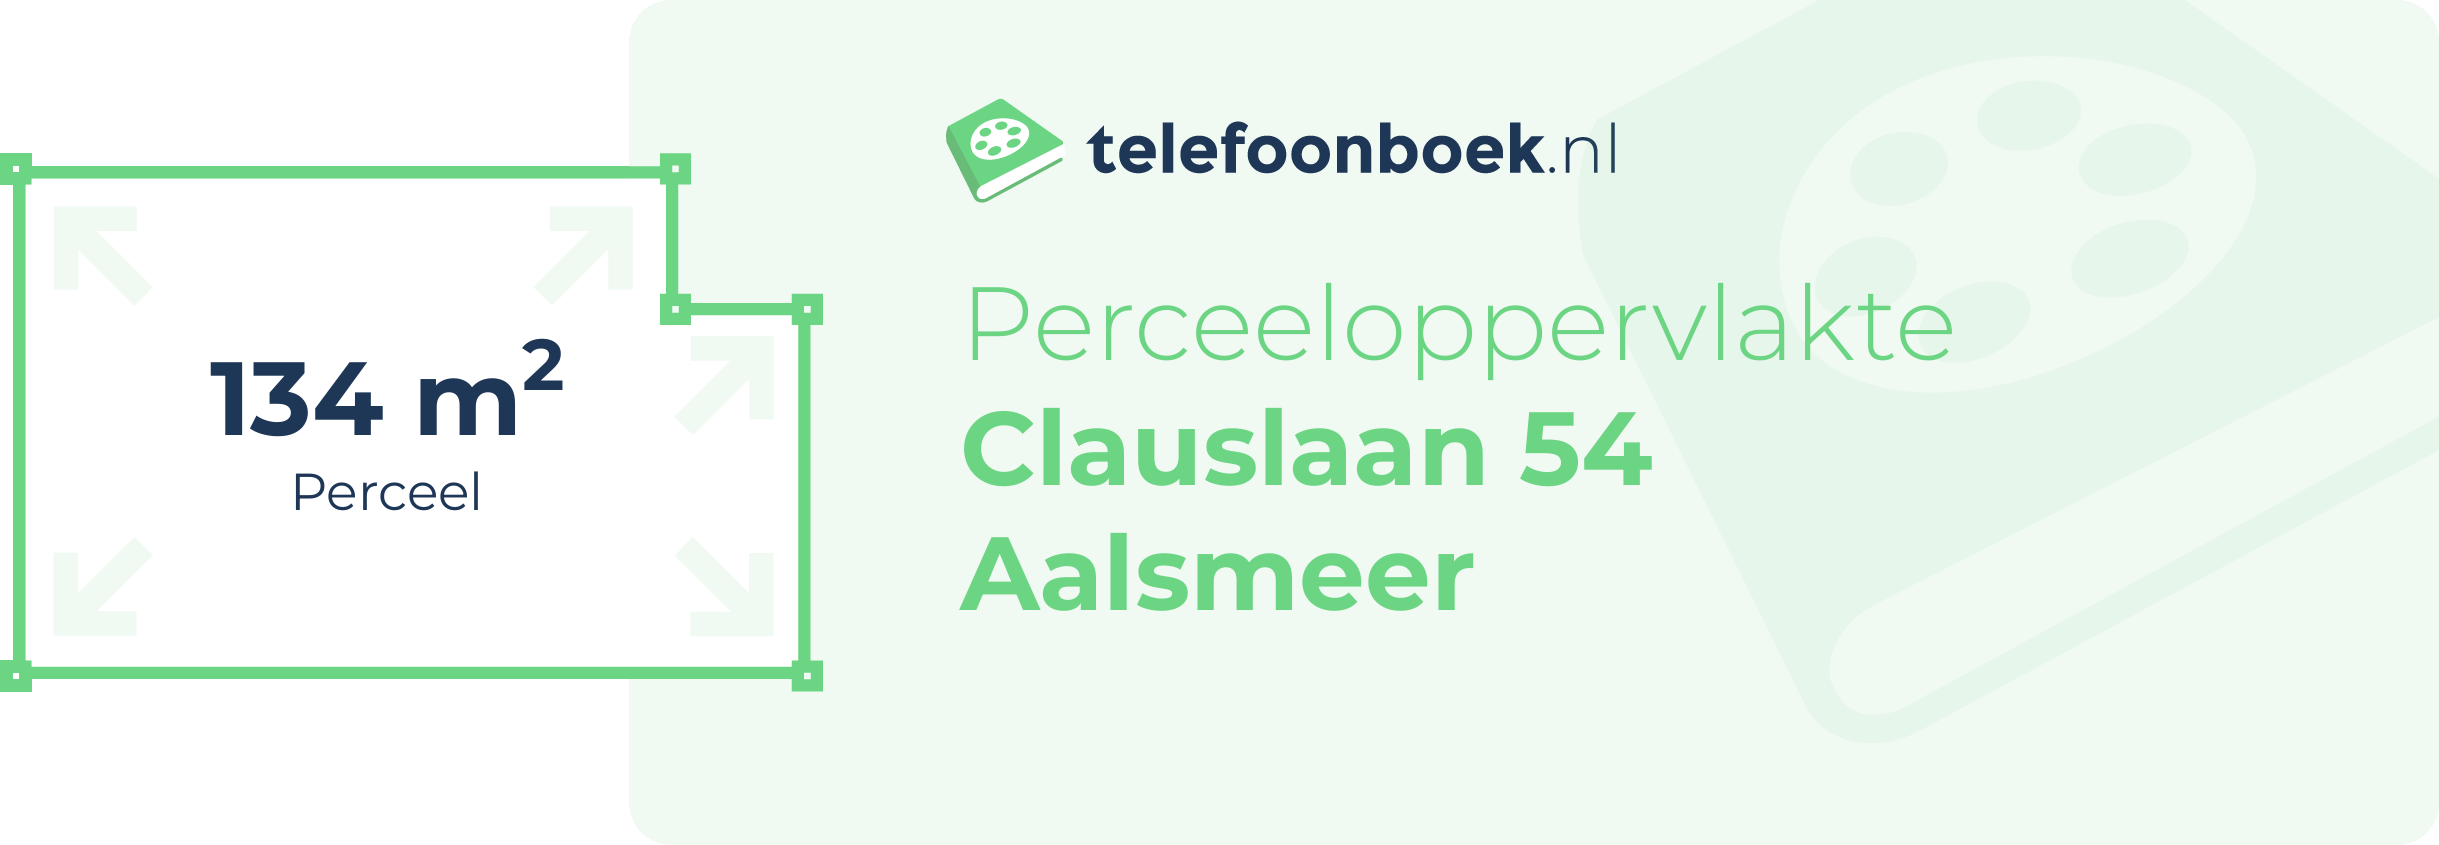 Perceeloppervlakte Clauslaan 54 Aalsmeer